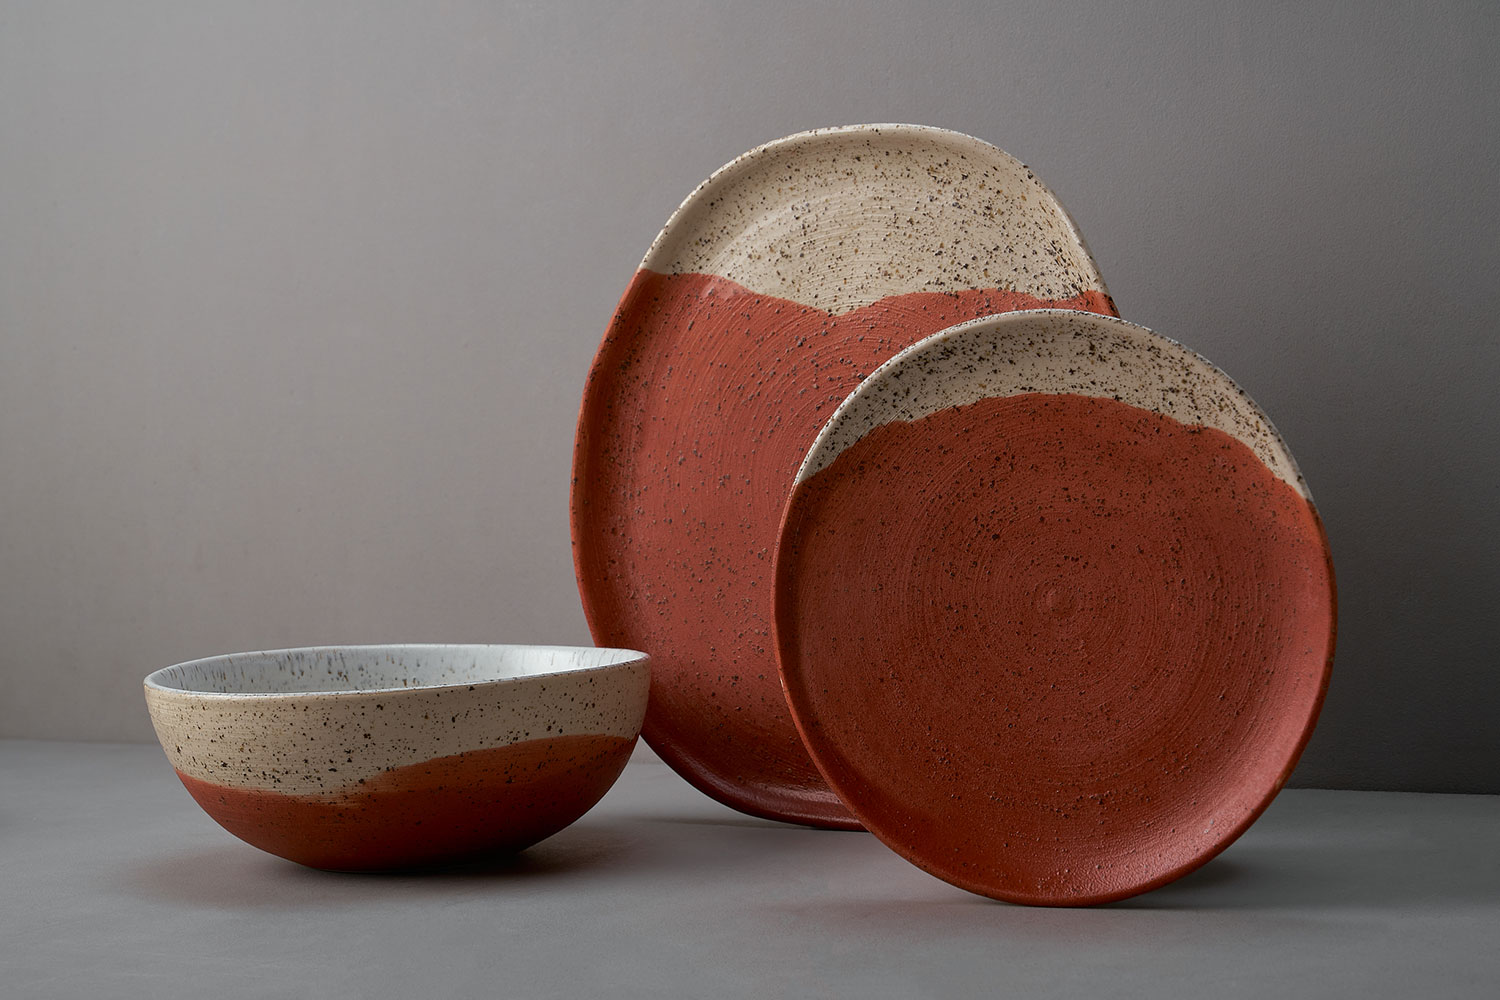 Kevala Ceramics in partnership with Uni Restaurant